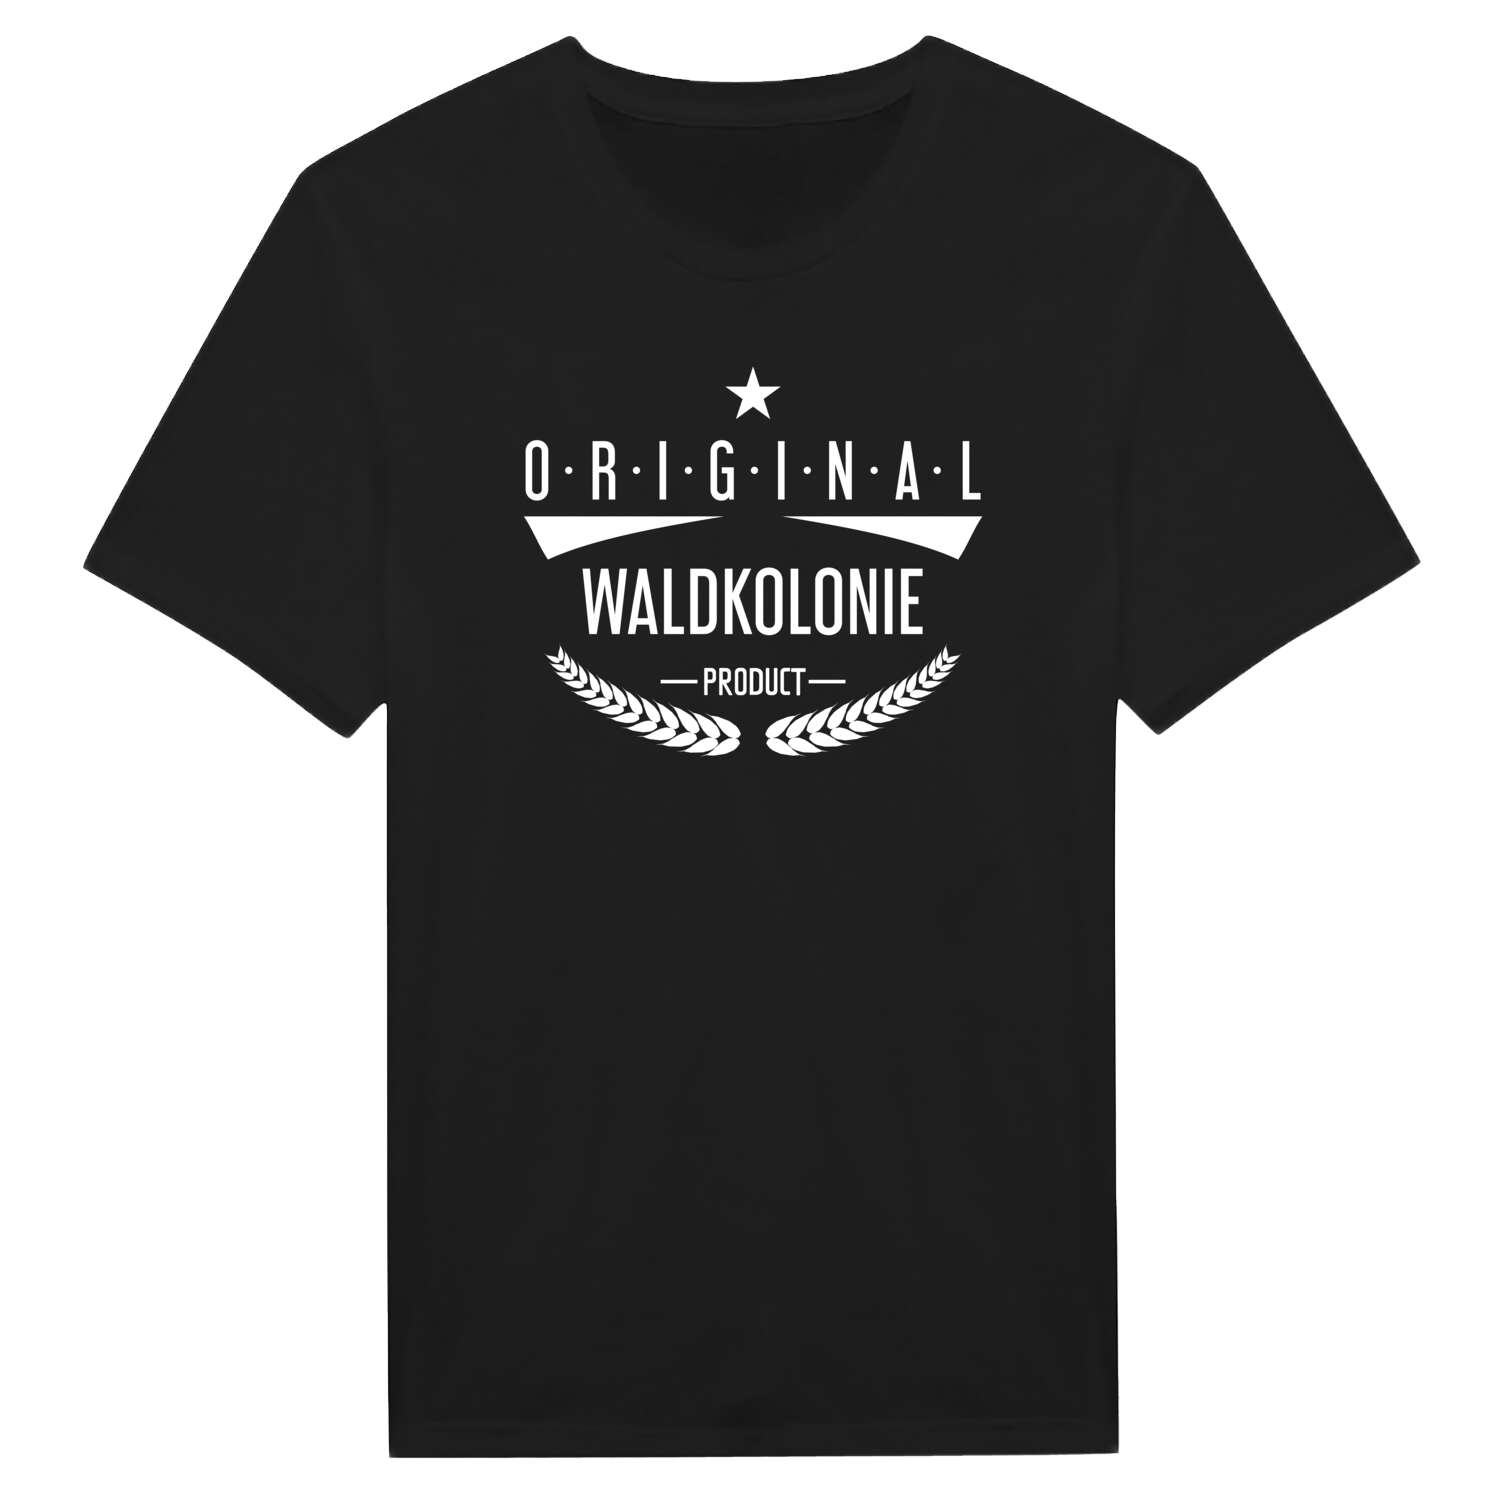 Waldkolonie T-Shirt »Original Product«